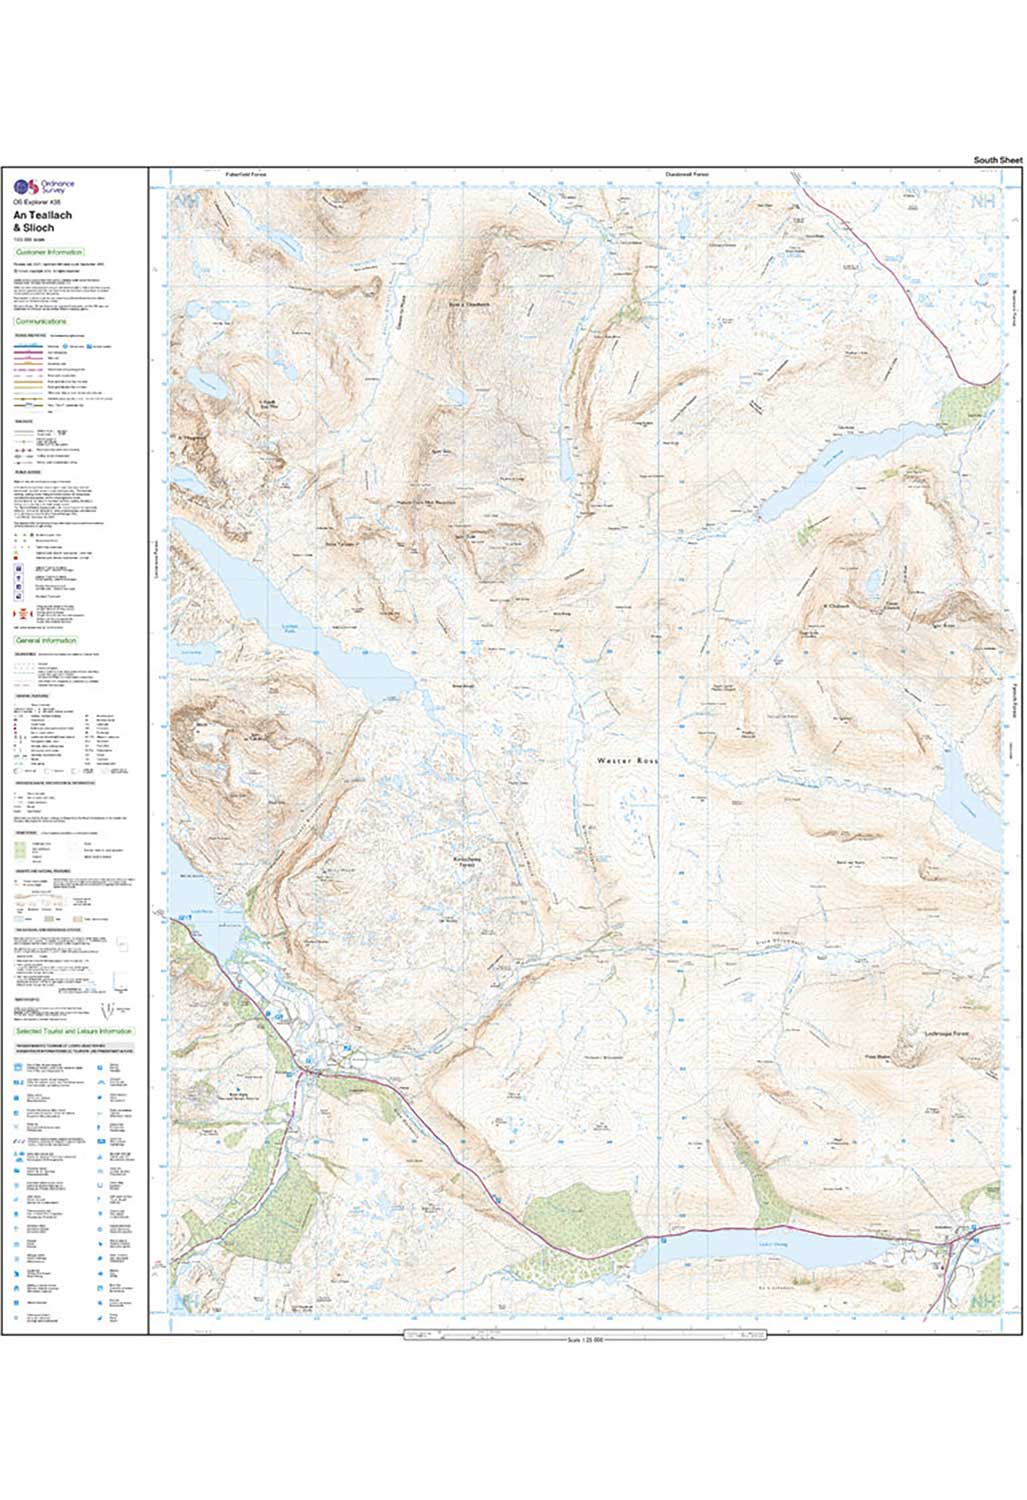 Ordnance Survey An Teallach & Slioch - OS Explorer Active 435 Map